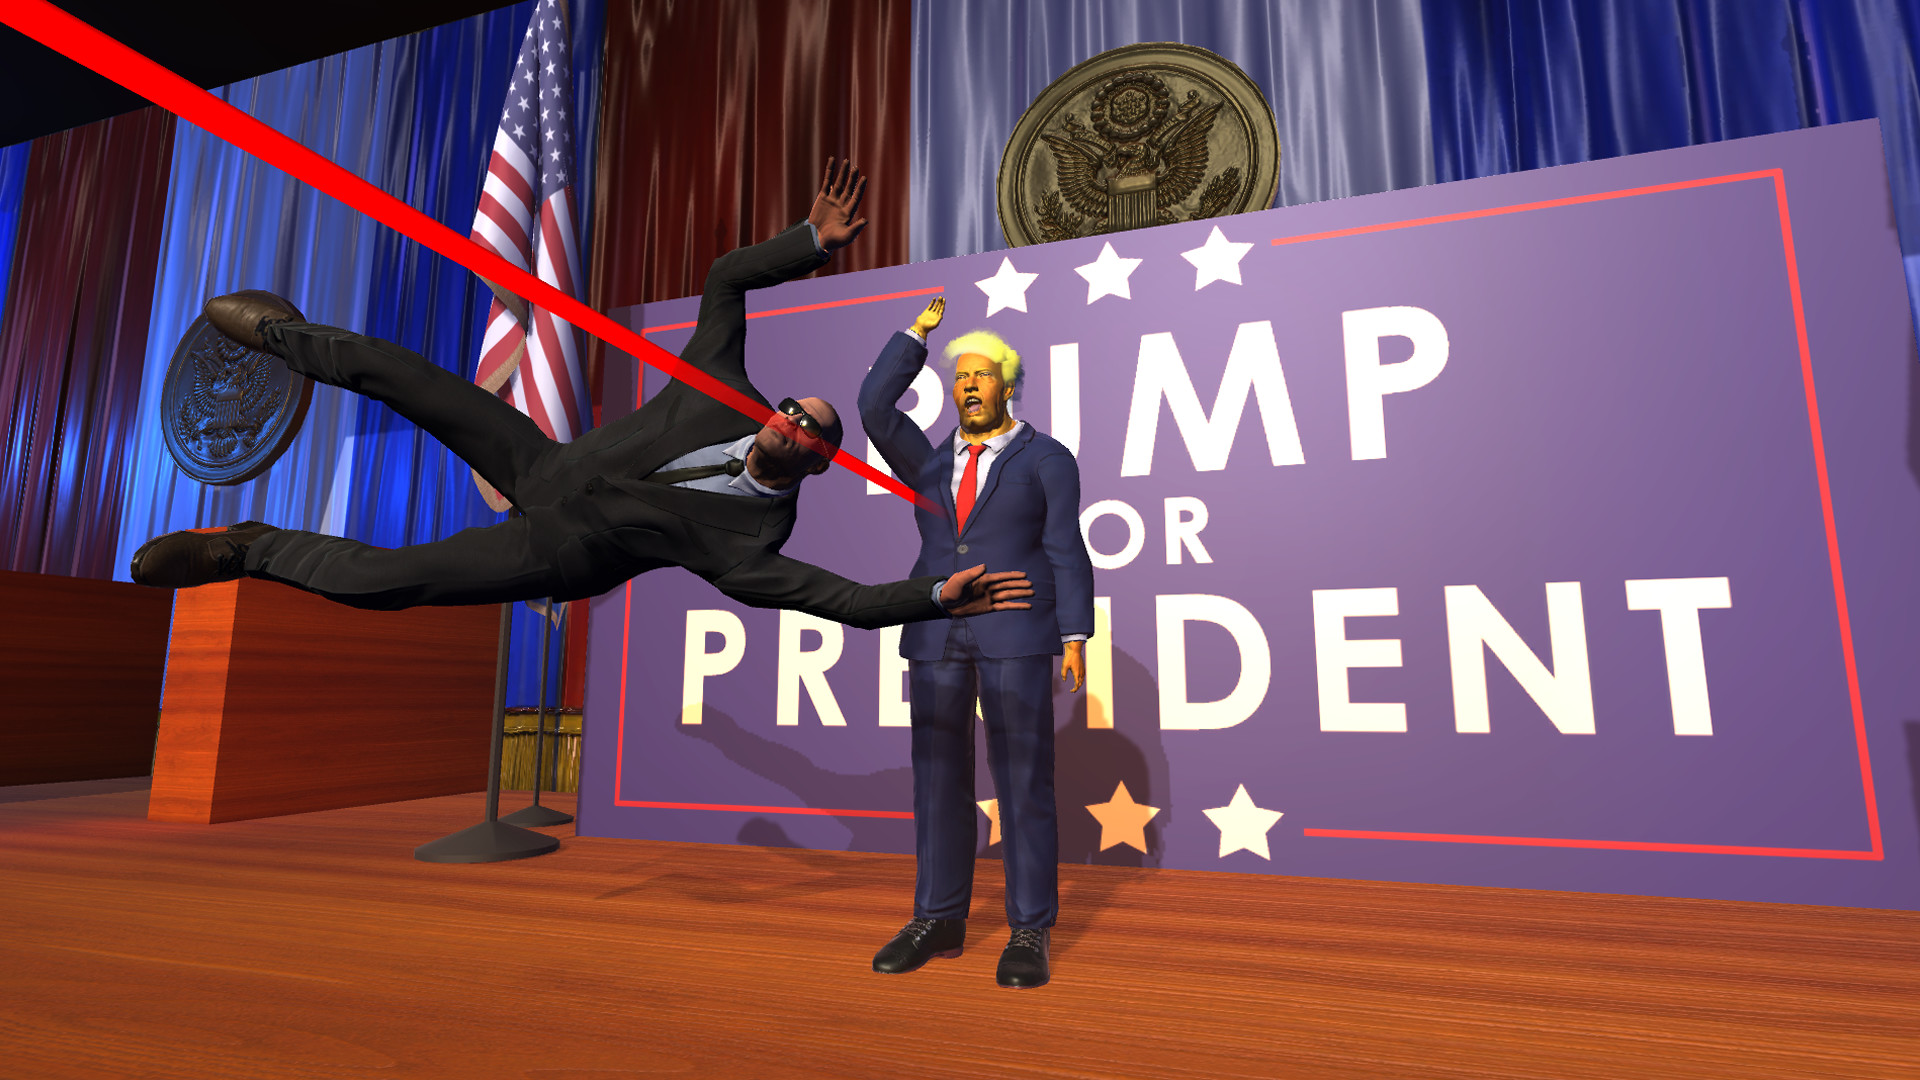 Mr President On Steam